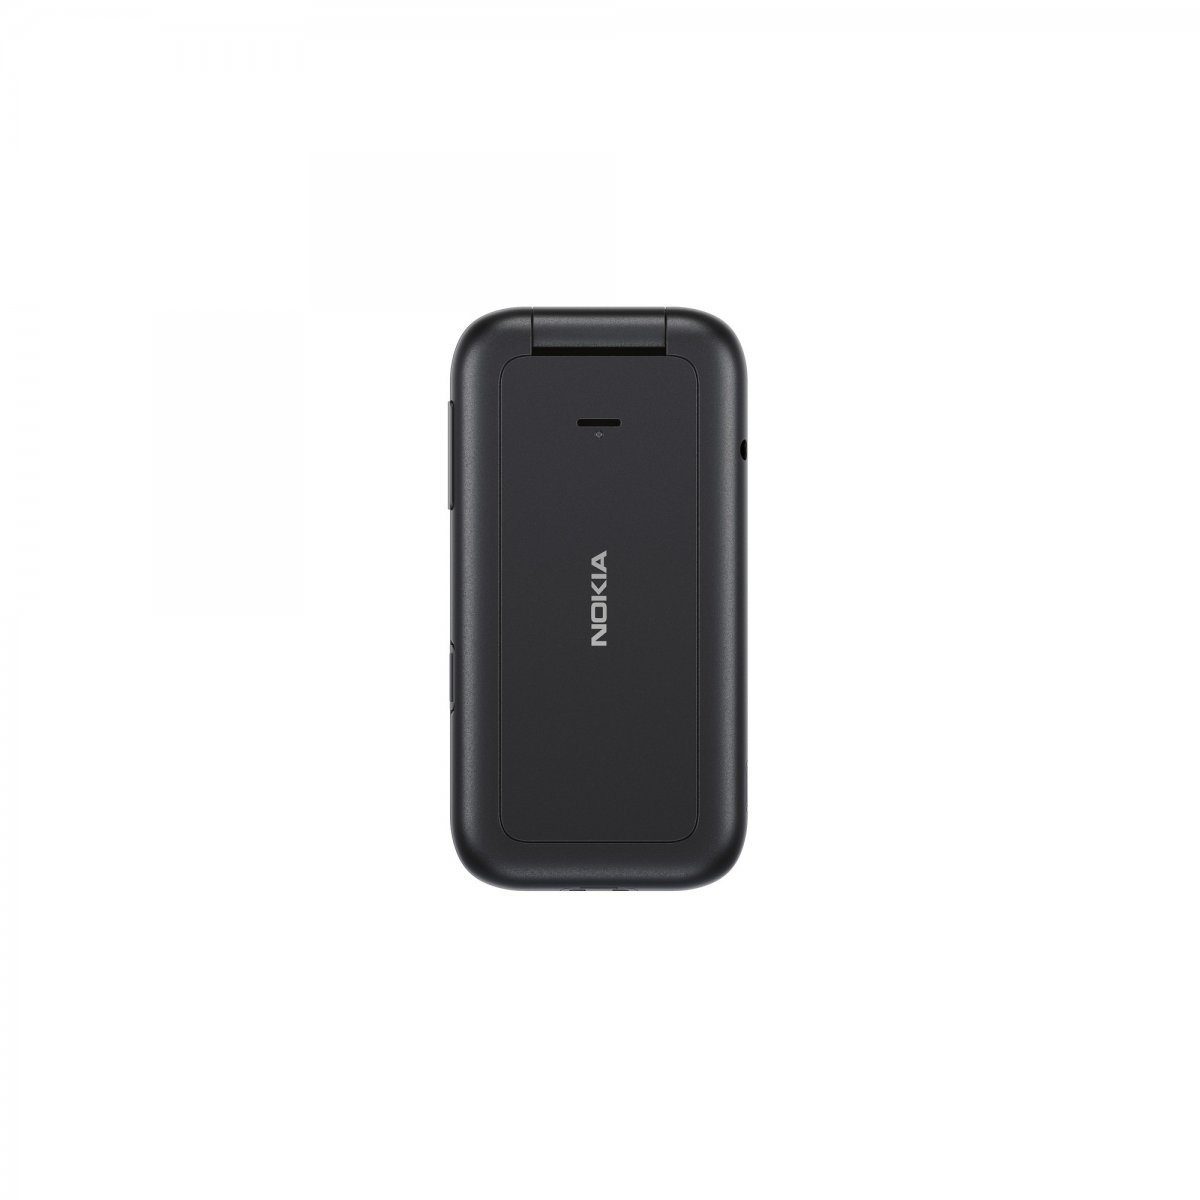 Nokia 2660 Flip, Dual SIM Black 1GF011EPA1A01